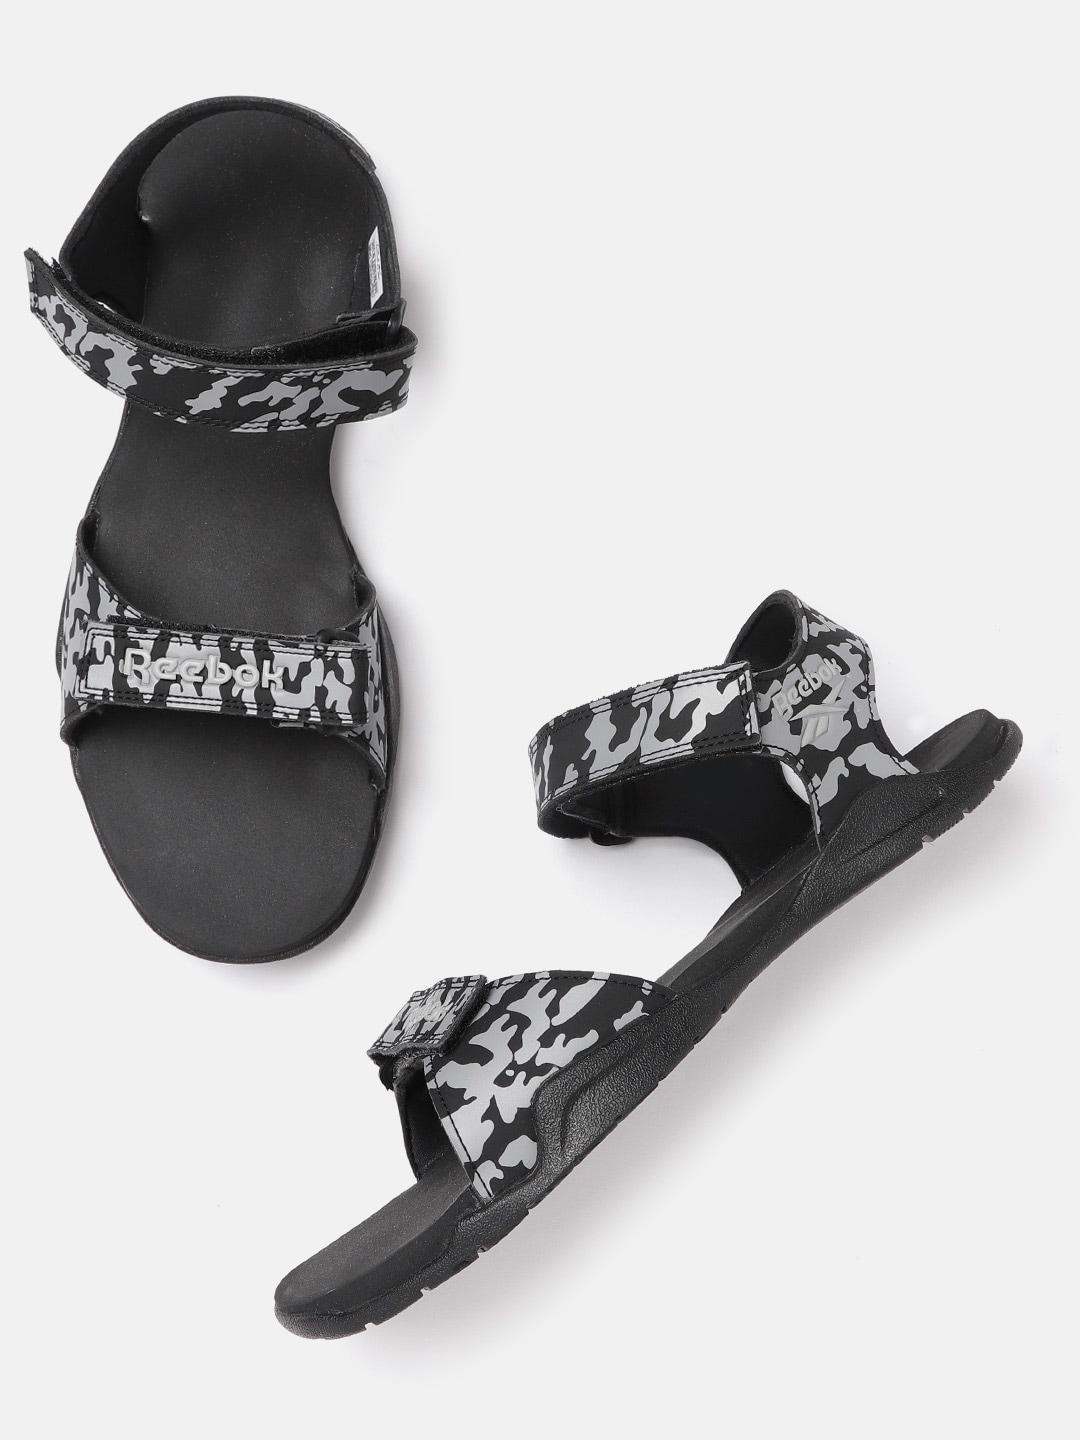 Reebok Men Black & Grey Camouflage Print Milo Sports Sandals